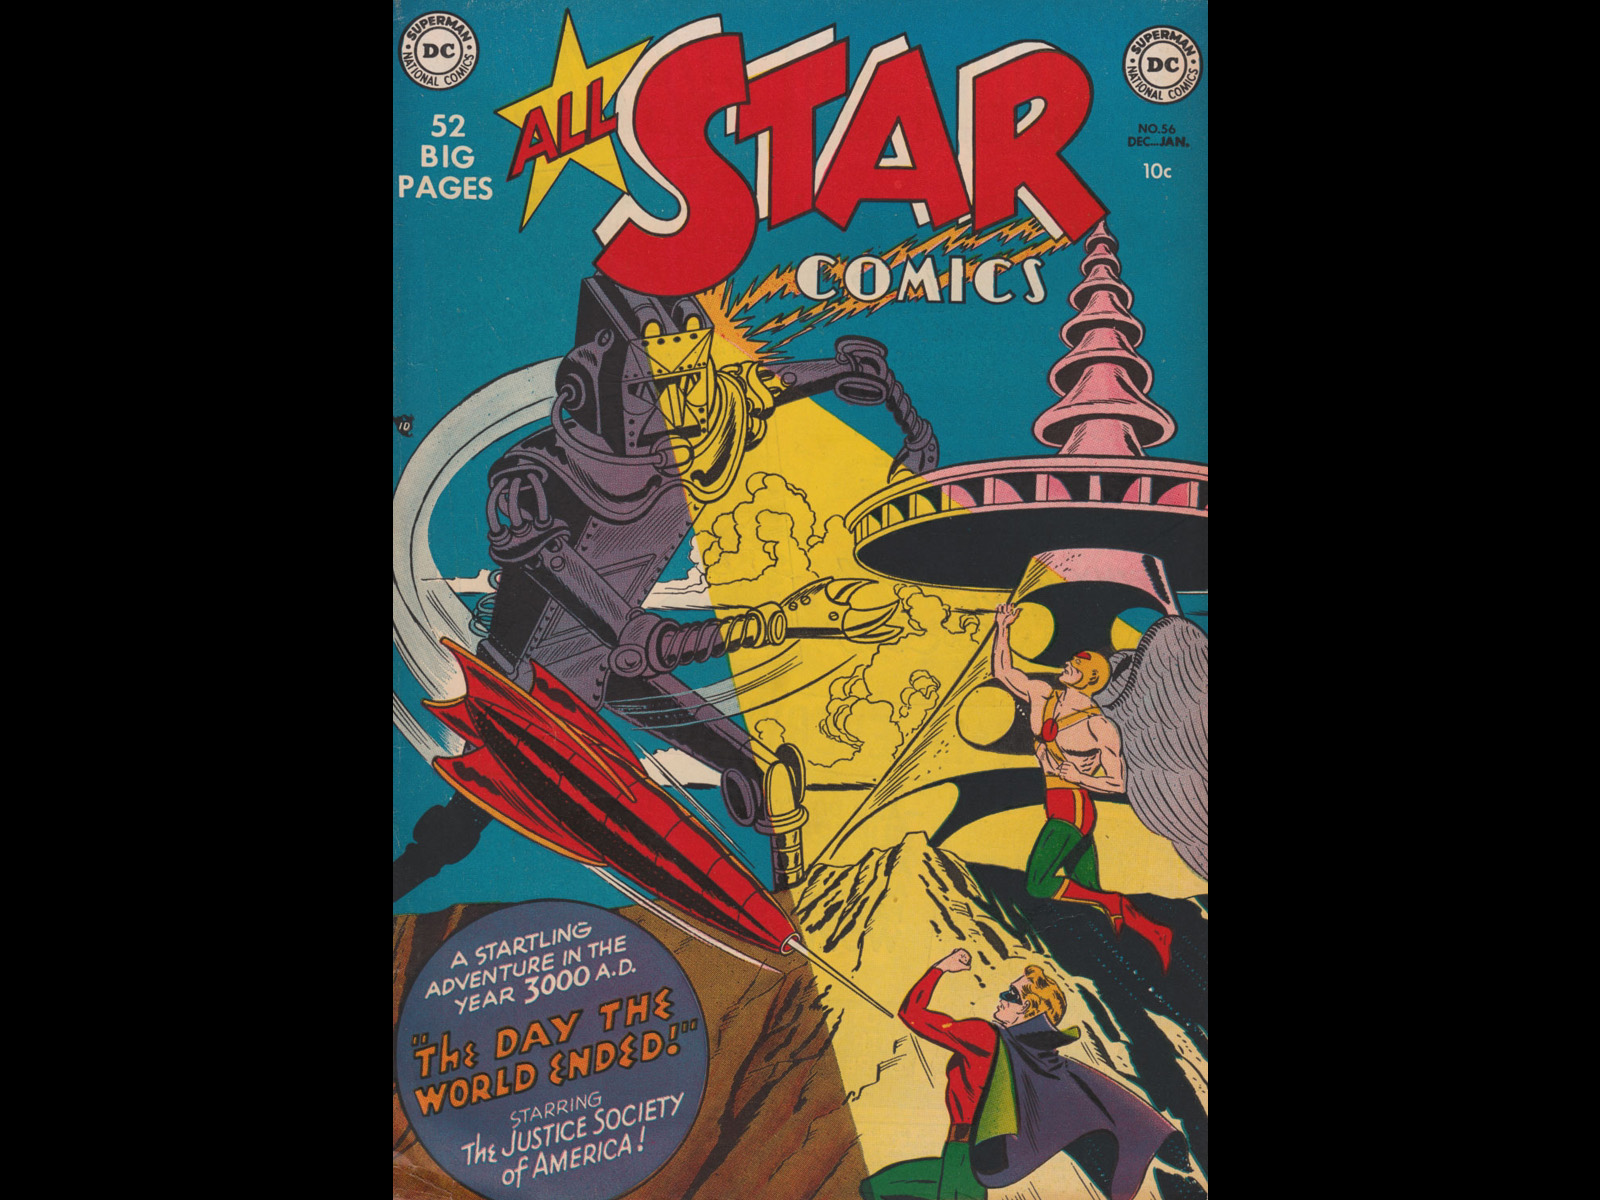 Handy-Wallpaper Comics, Dc Comics, Grüne Laterne, Hawkman (Dc Comics), Carter Halle, Alan Scott (Dc Comics), All Star Comics kostenlos herunterladen.